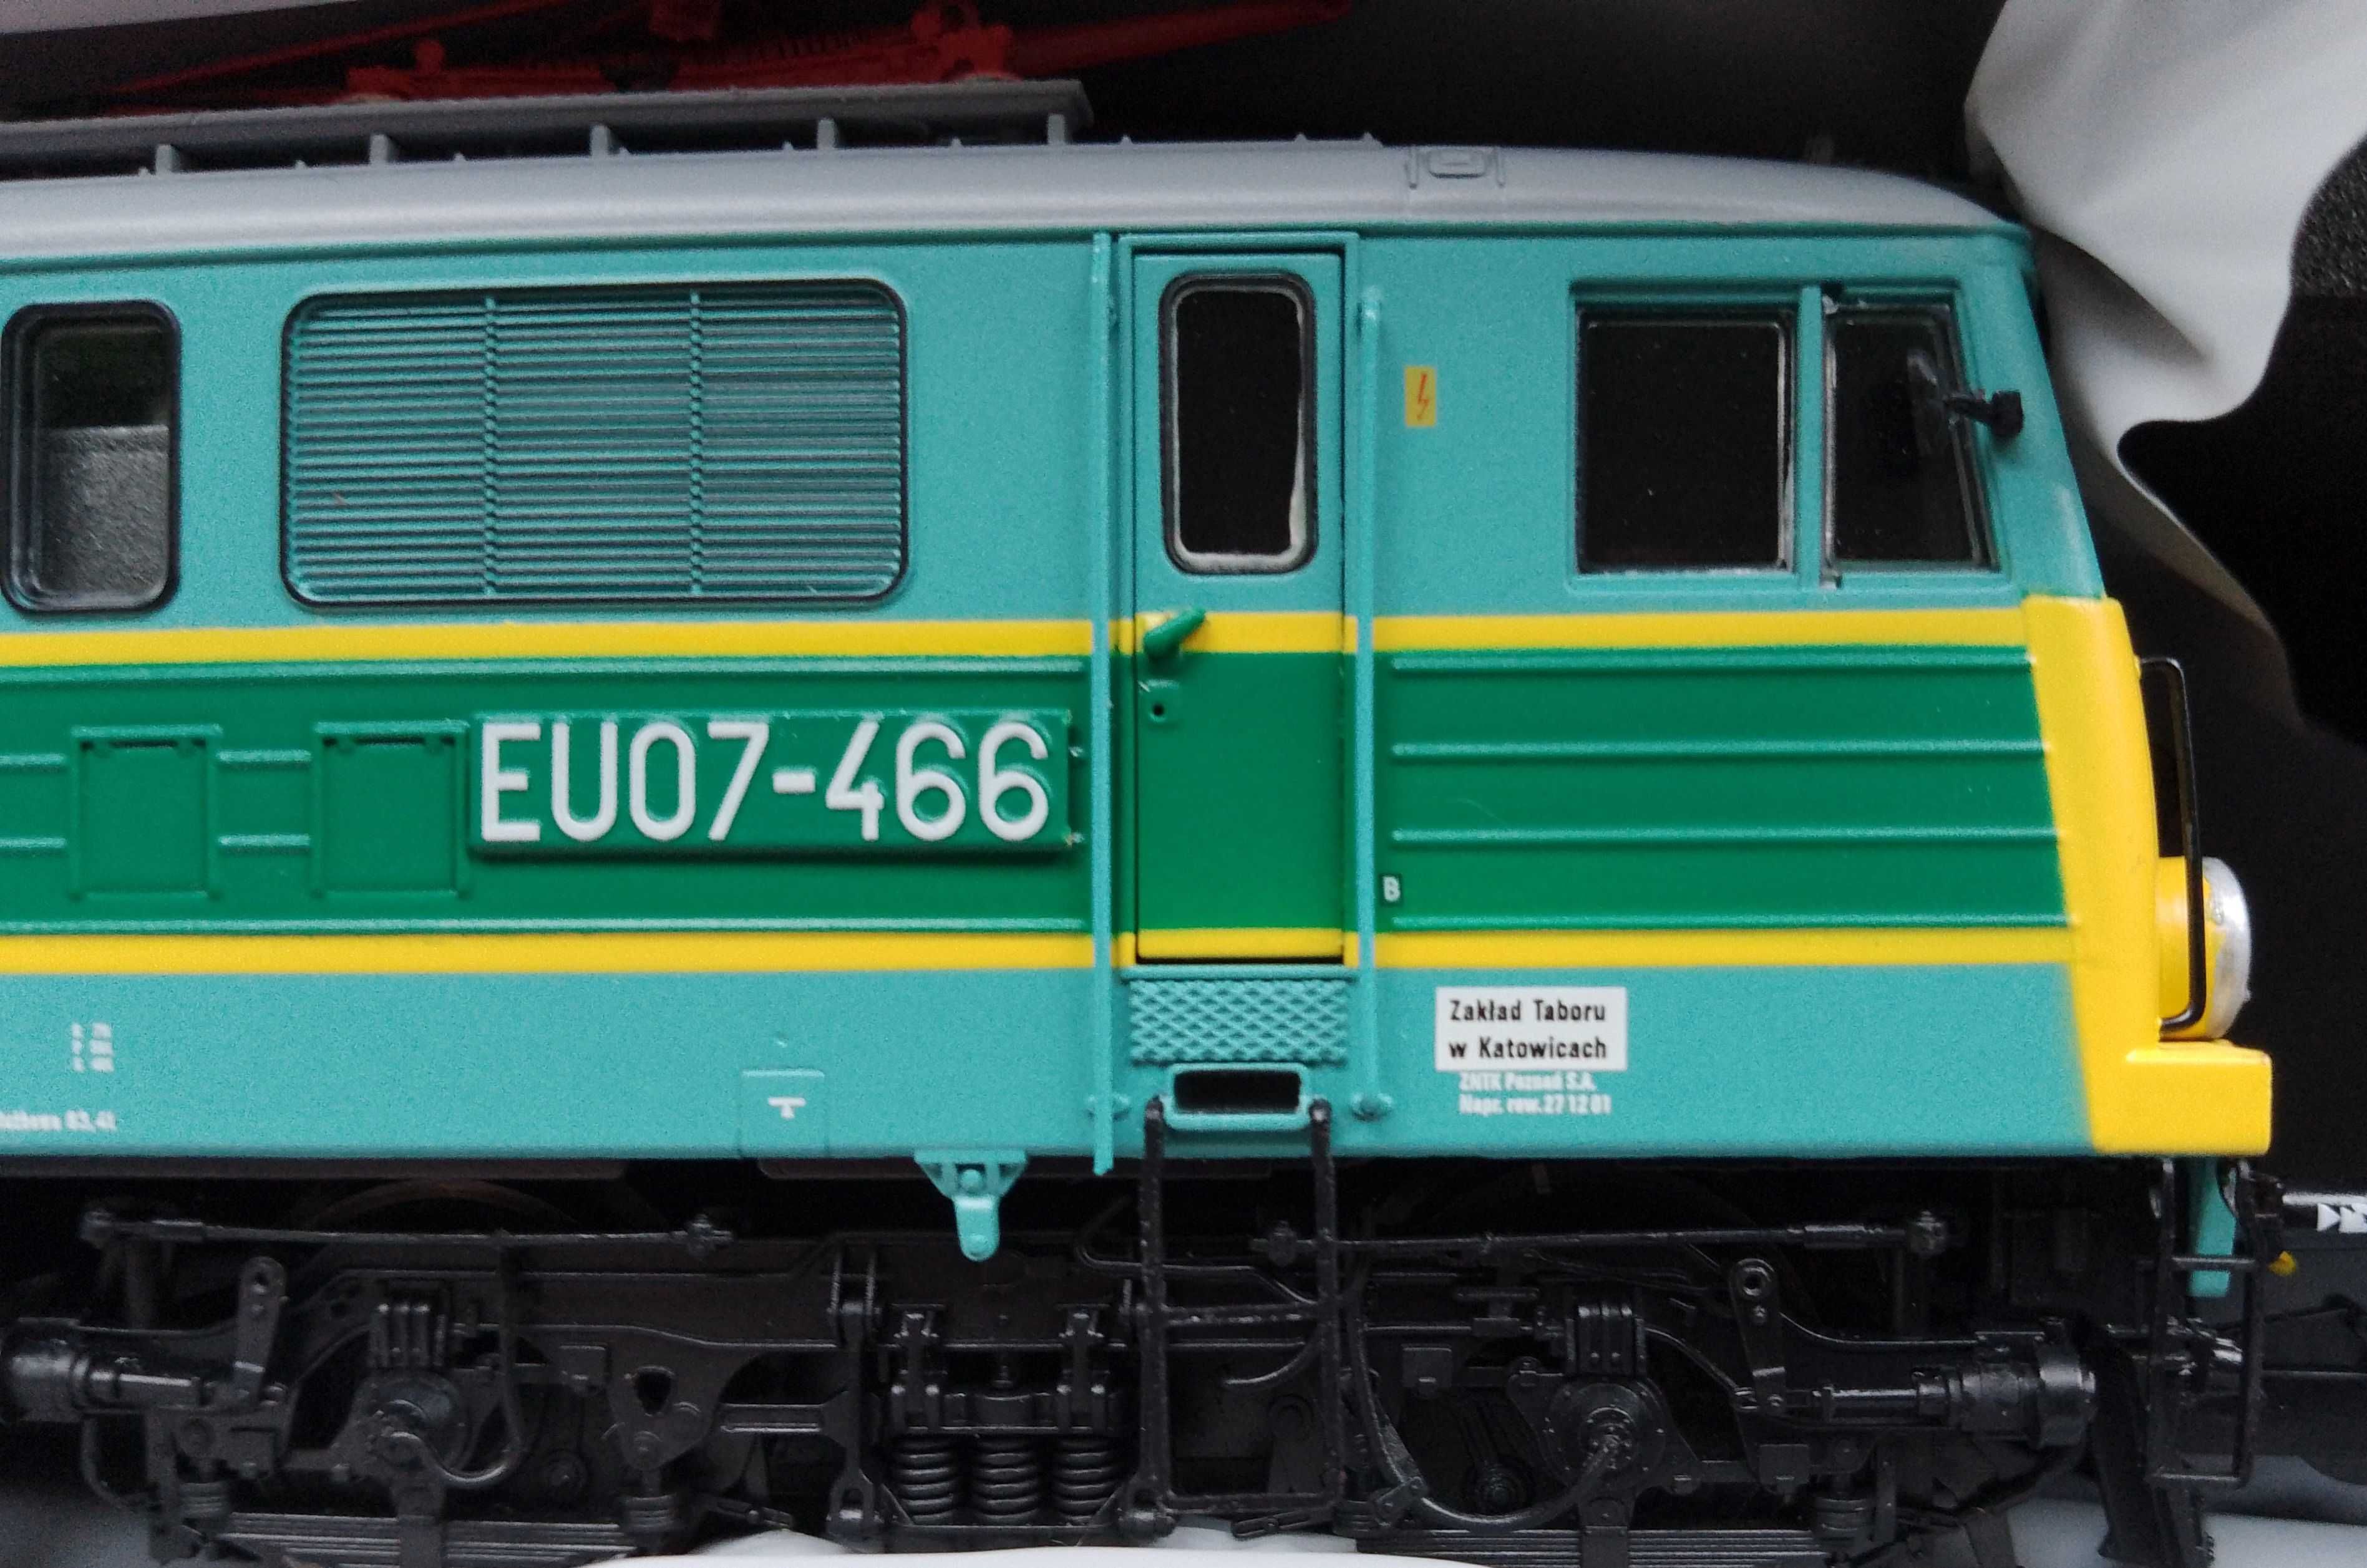 lokomotywa eu 07-466 schlesienmodelle